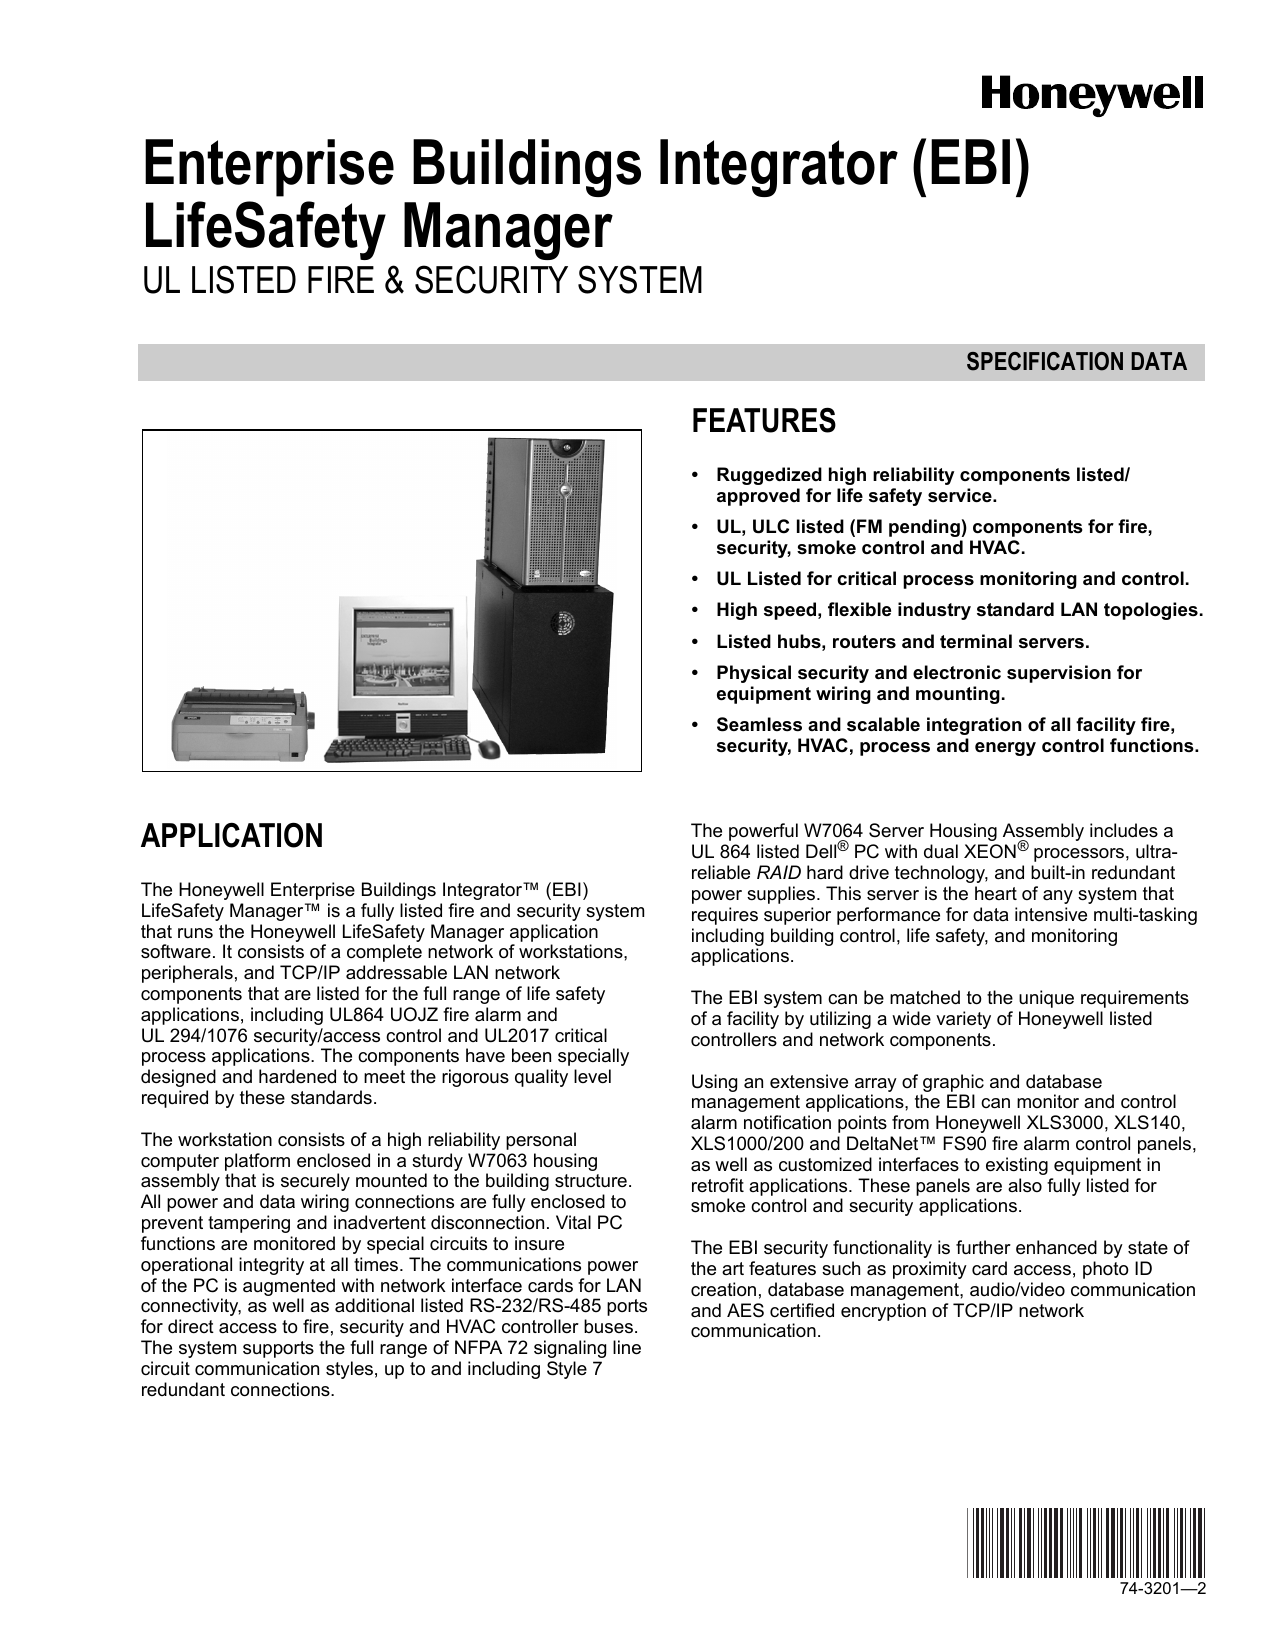 bms operator job description pdf